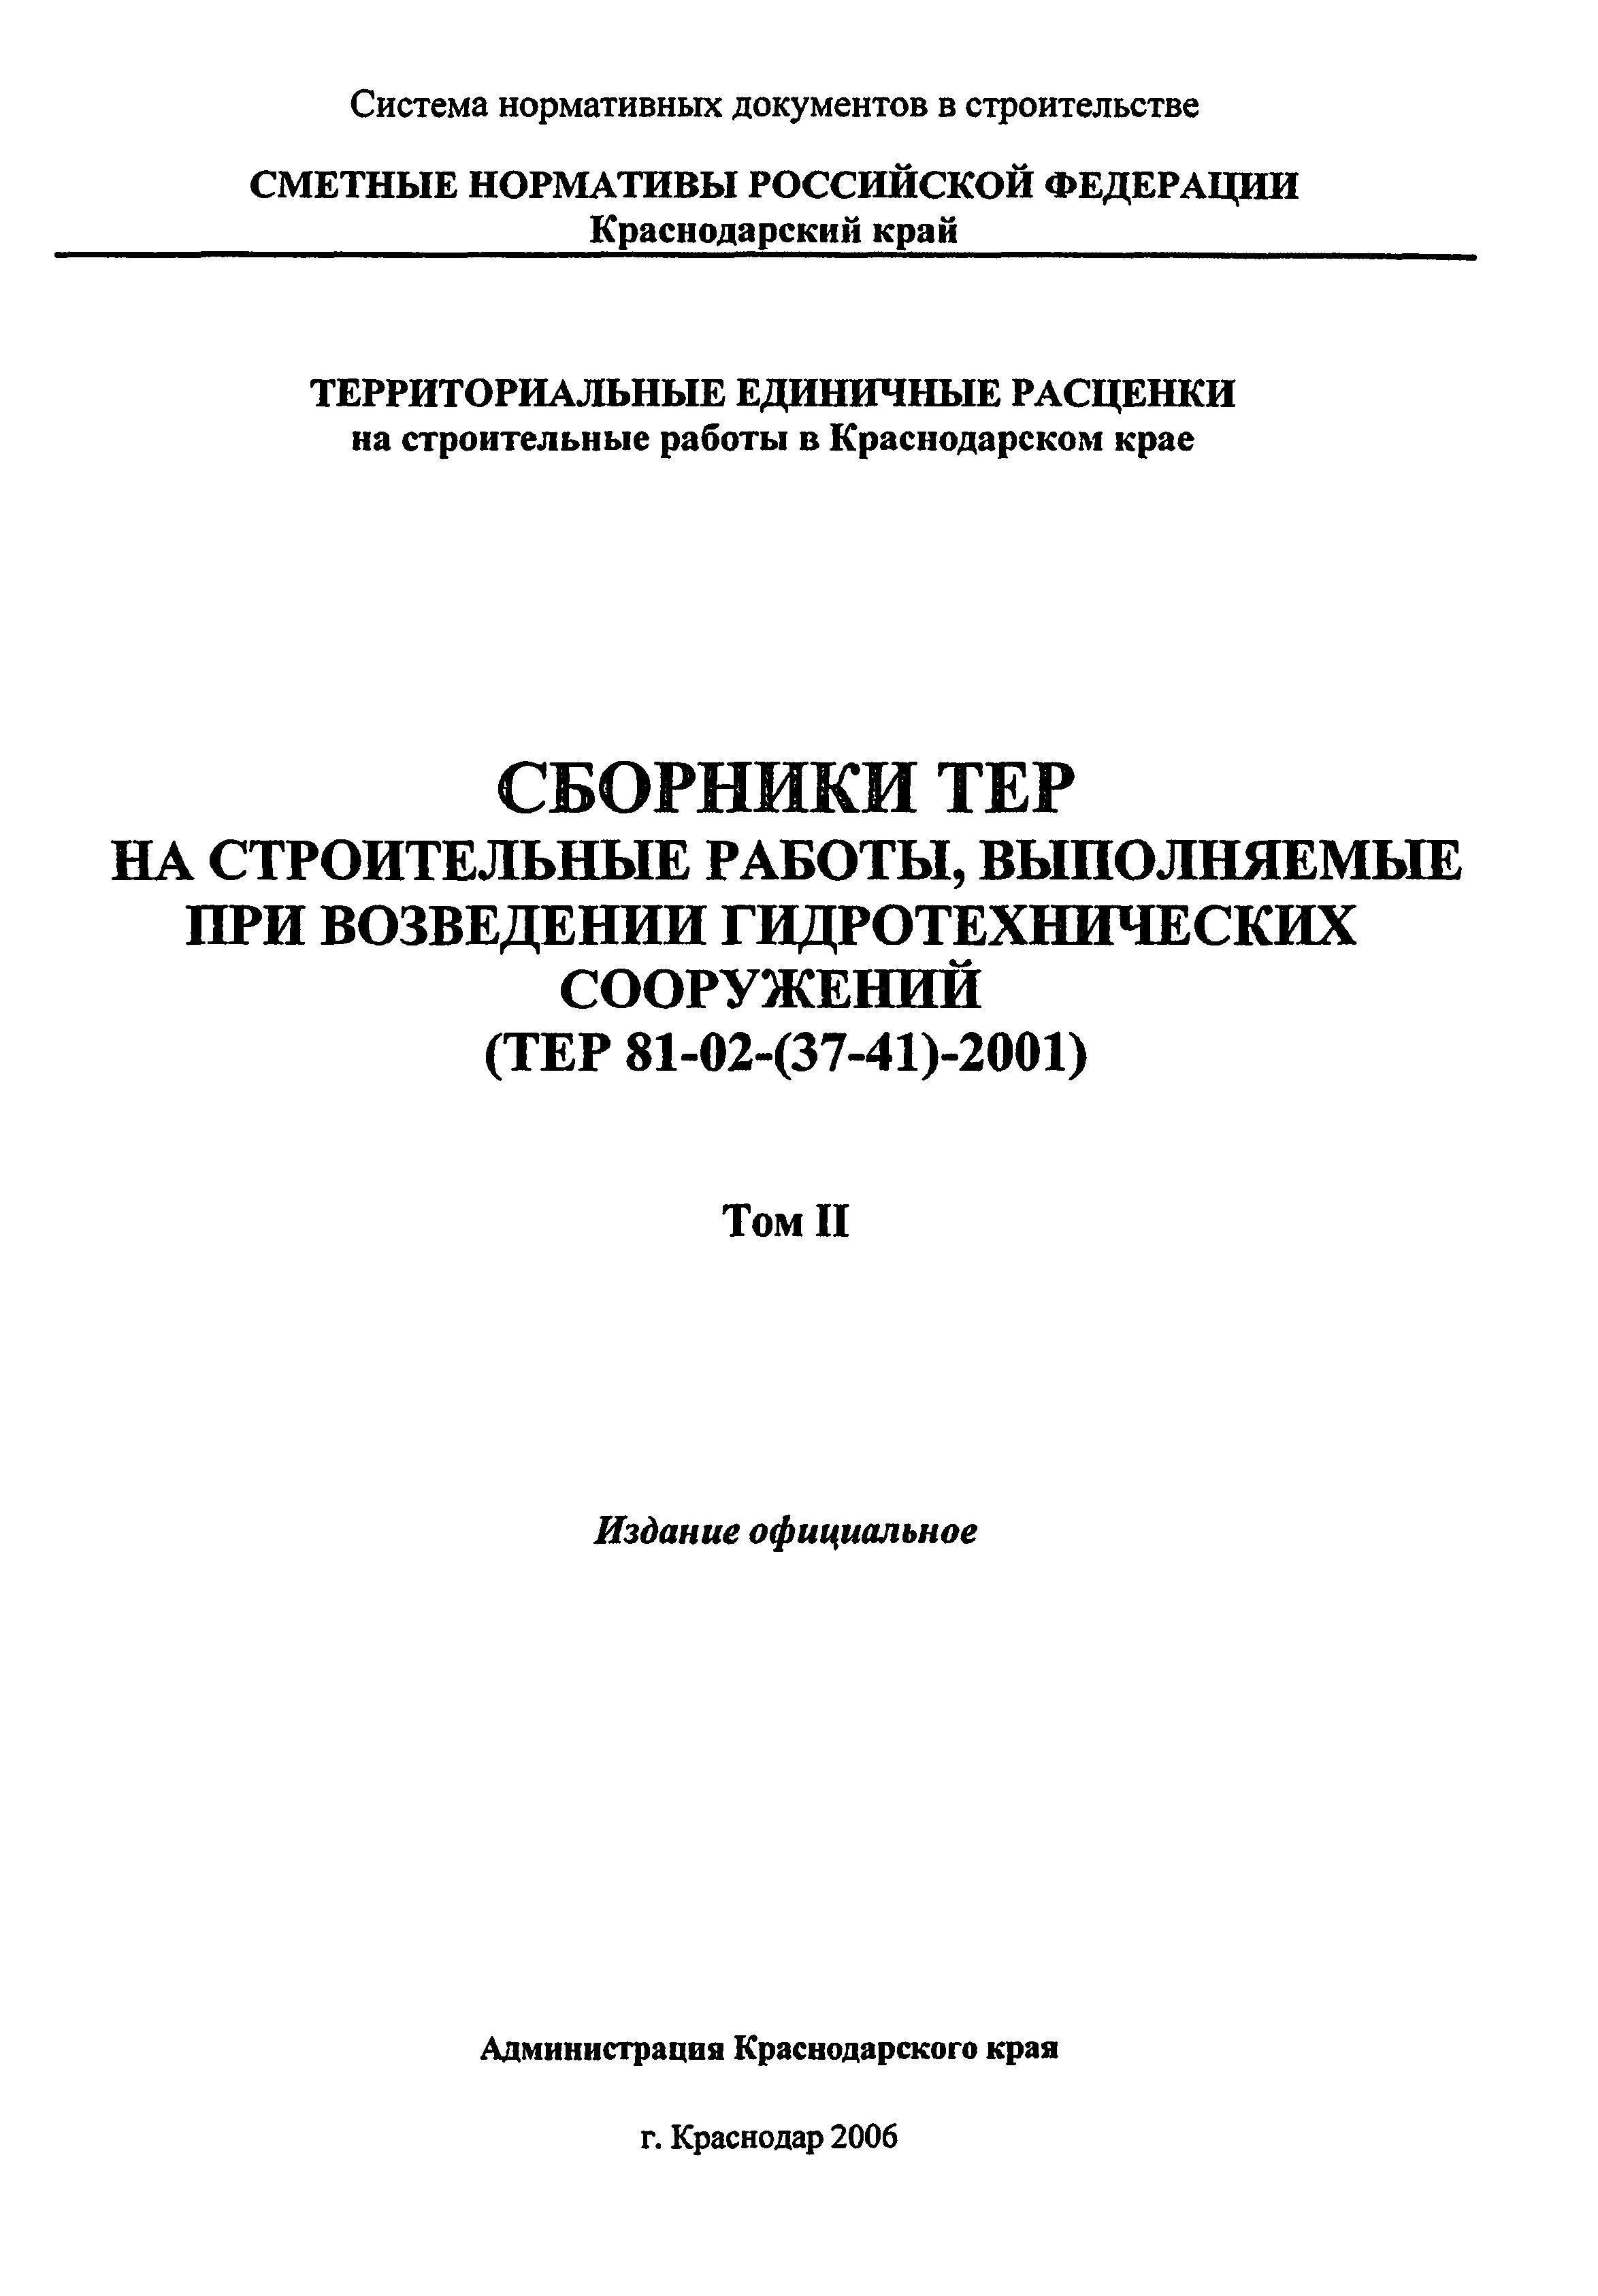 ТЕР Краснодарский край 2001-37